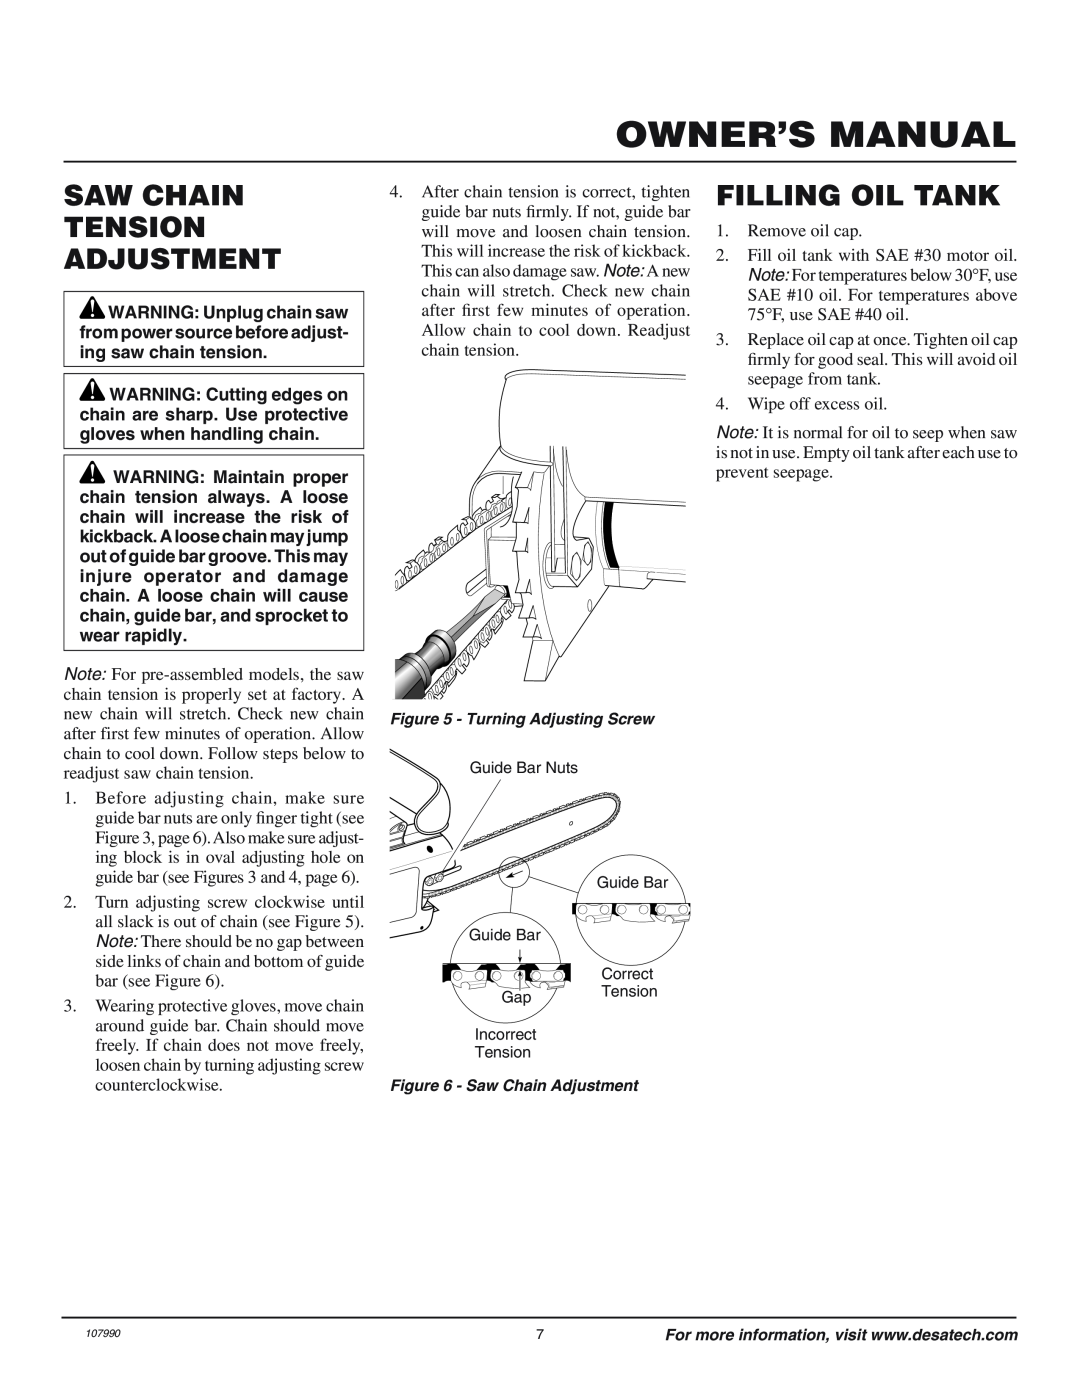 Remington owner manual Saw Chain Tension Adjustment, Filling Oil Tank, Owner’S Manual 